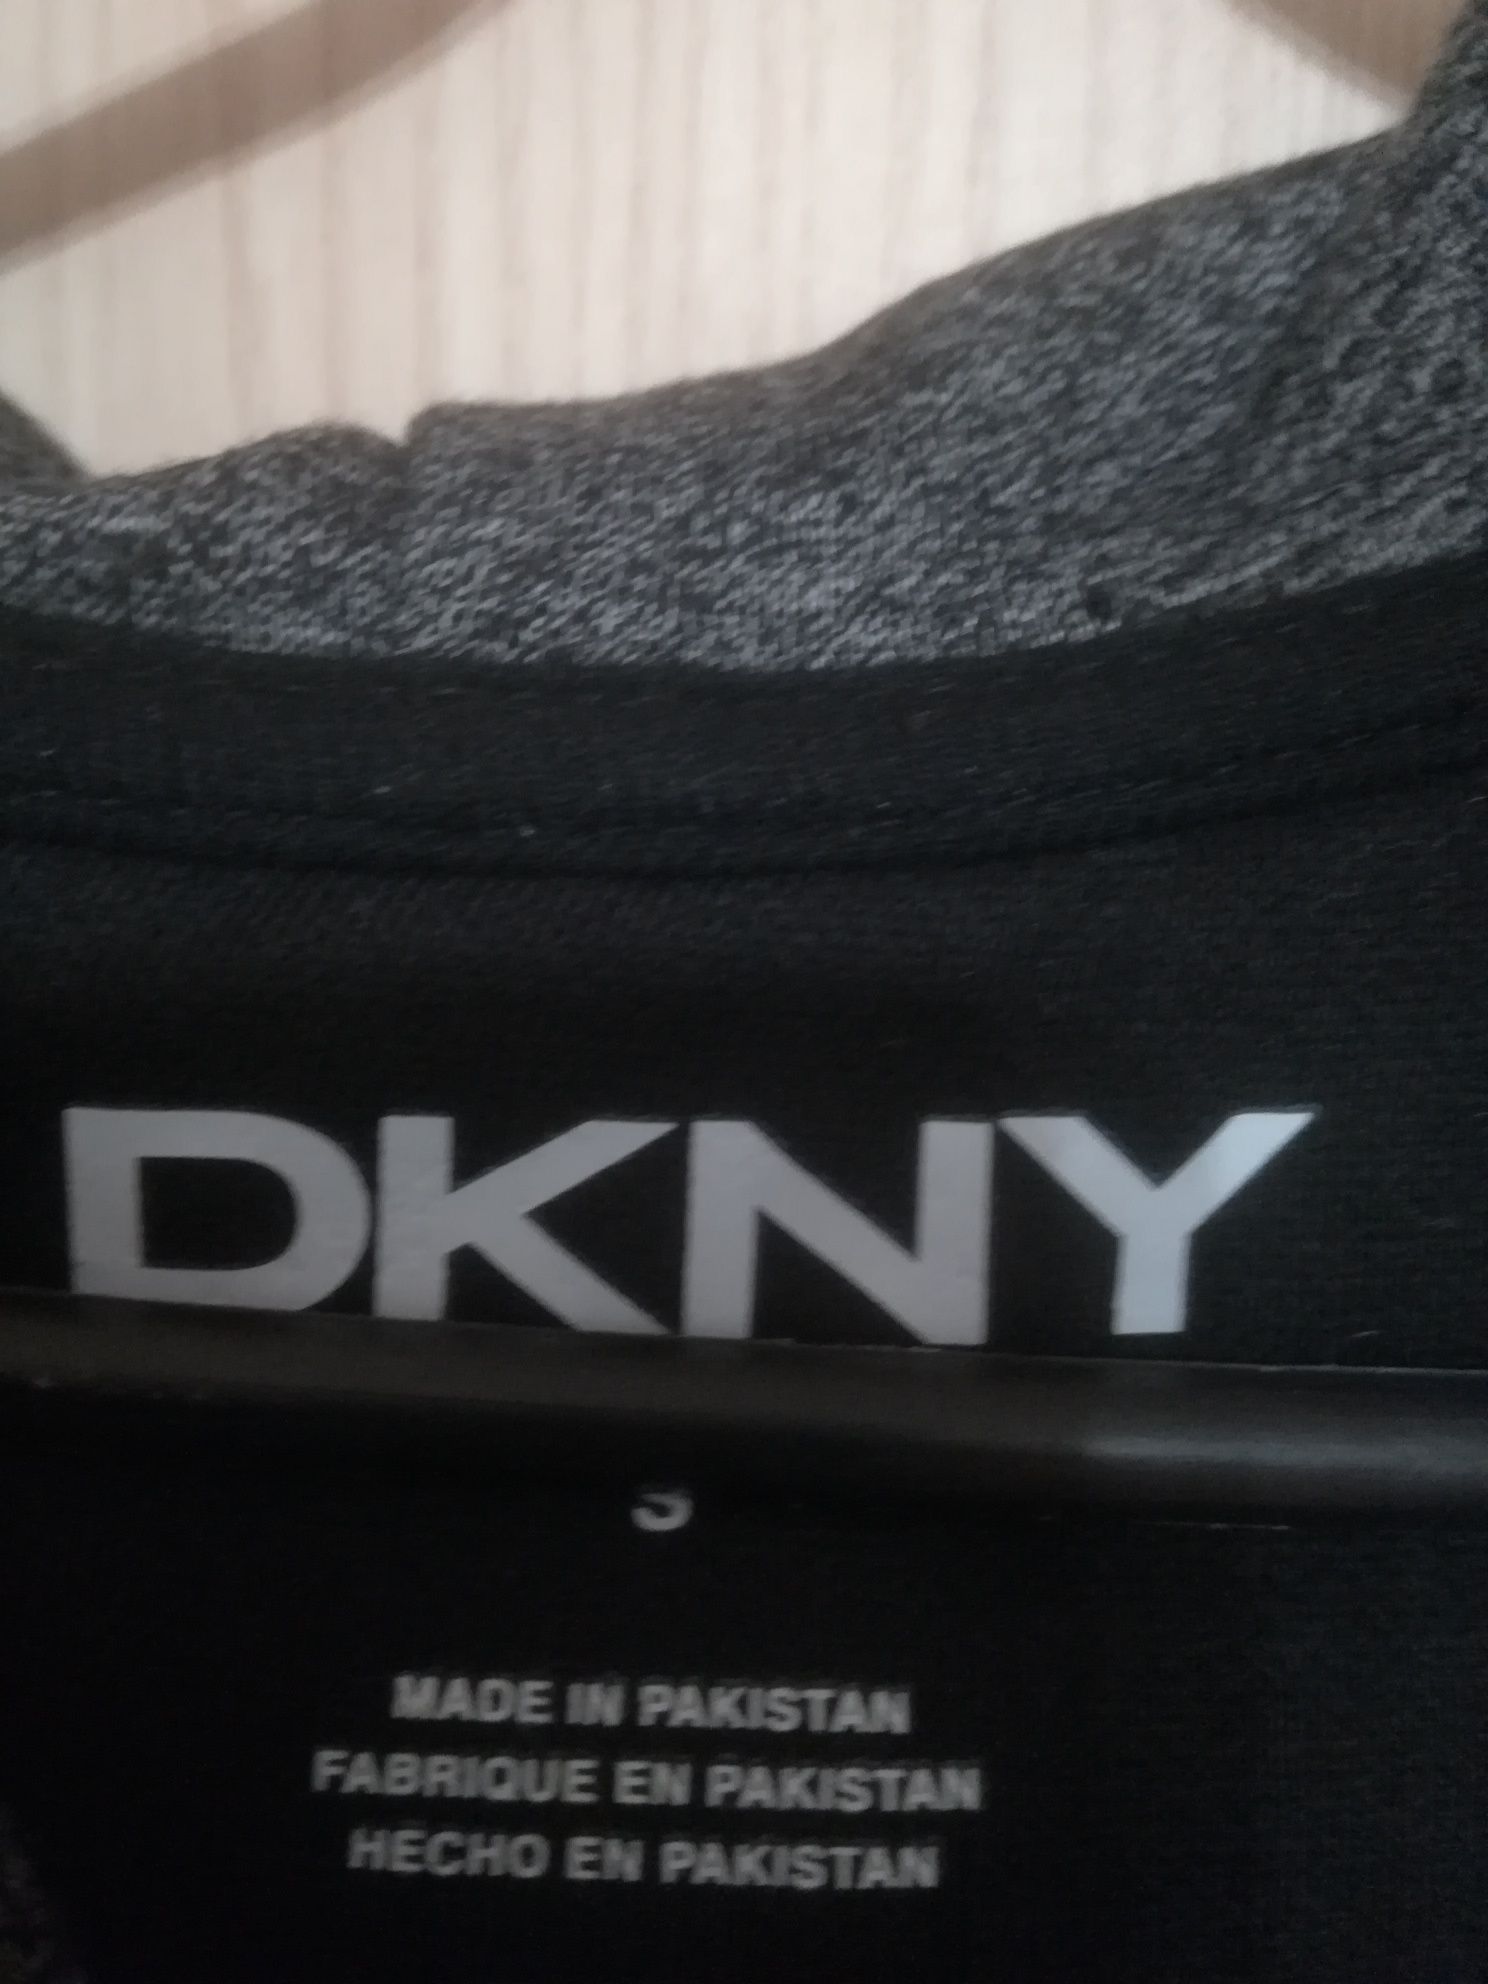 Bluza męska DKNY. Okazja.